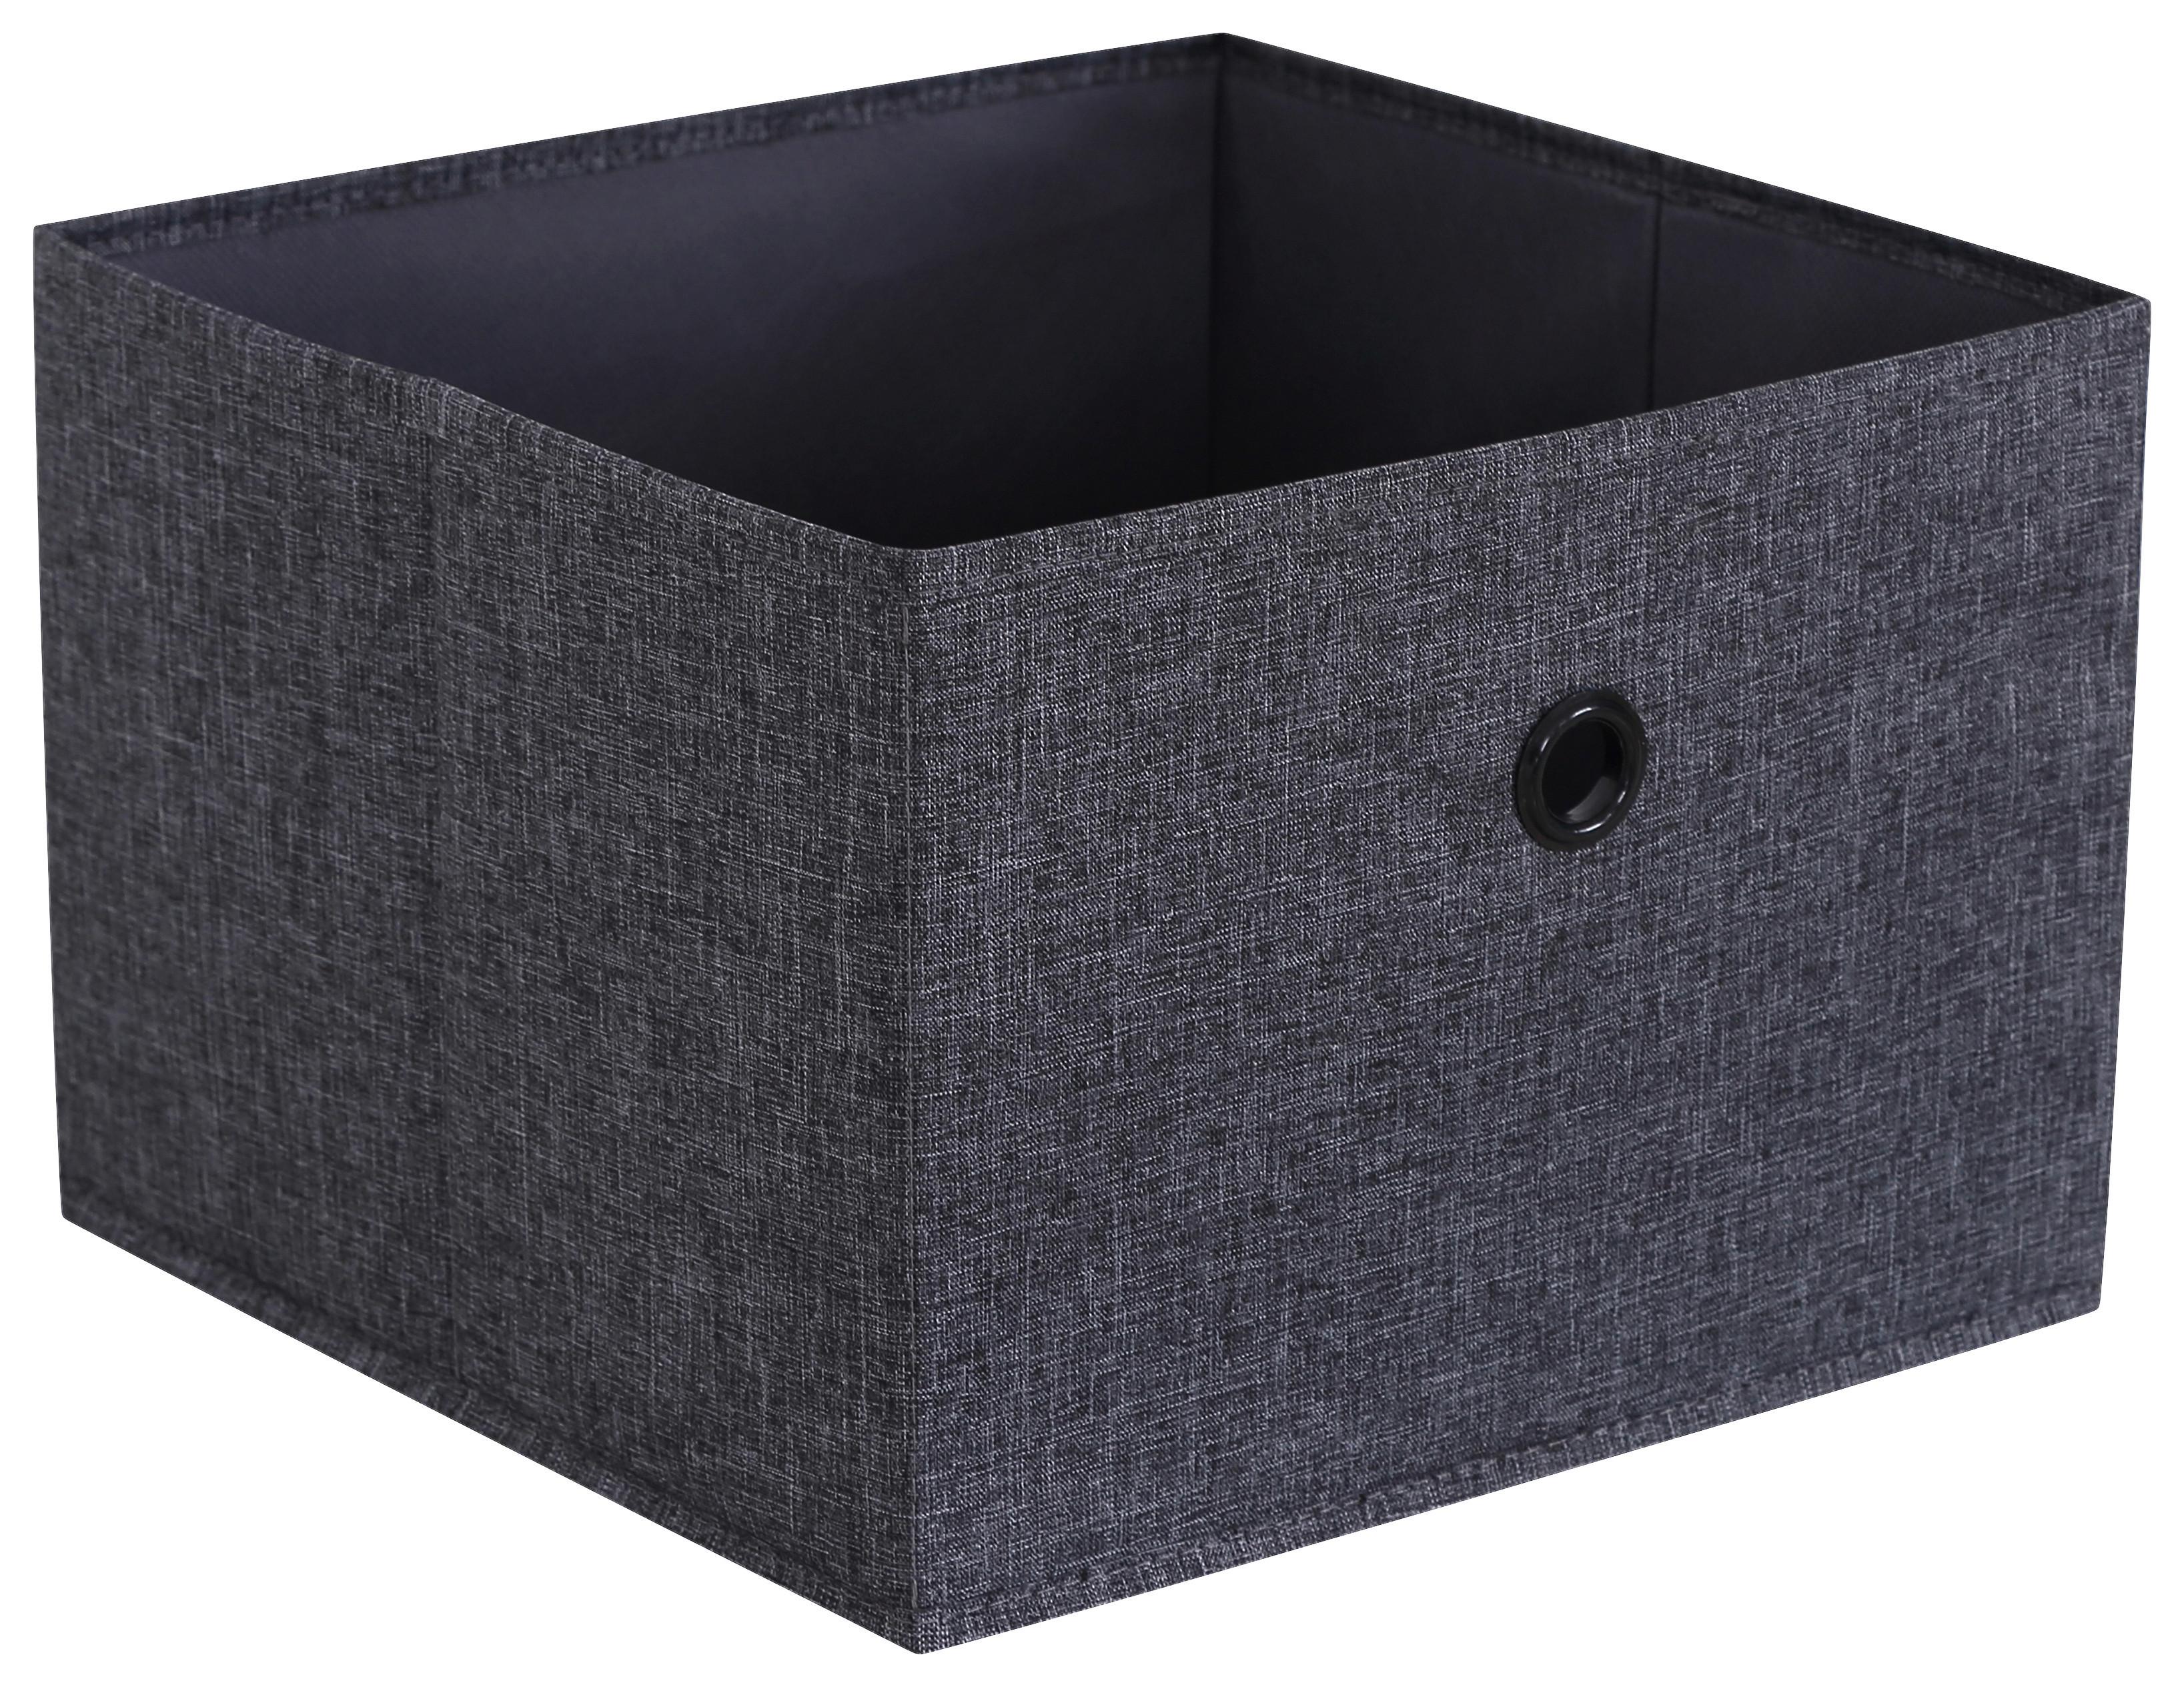 Aufbewahrungsbox Nahla in Grau - Grau, Konventionell, Karton/Textil (29/20/29cm) - Modern Living